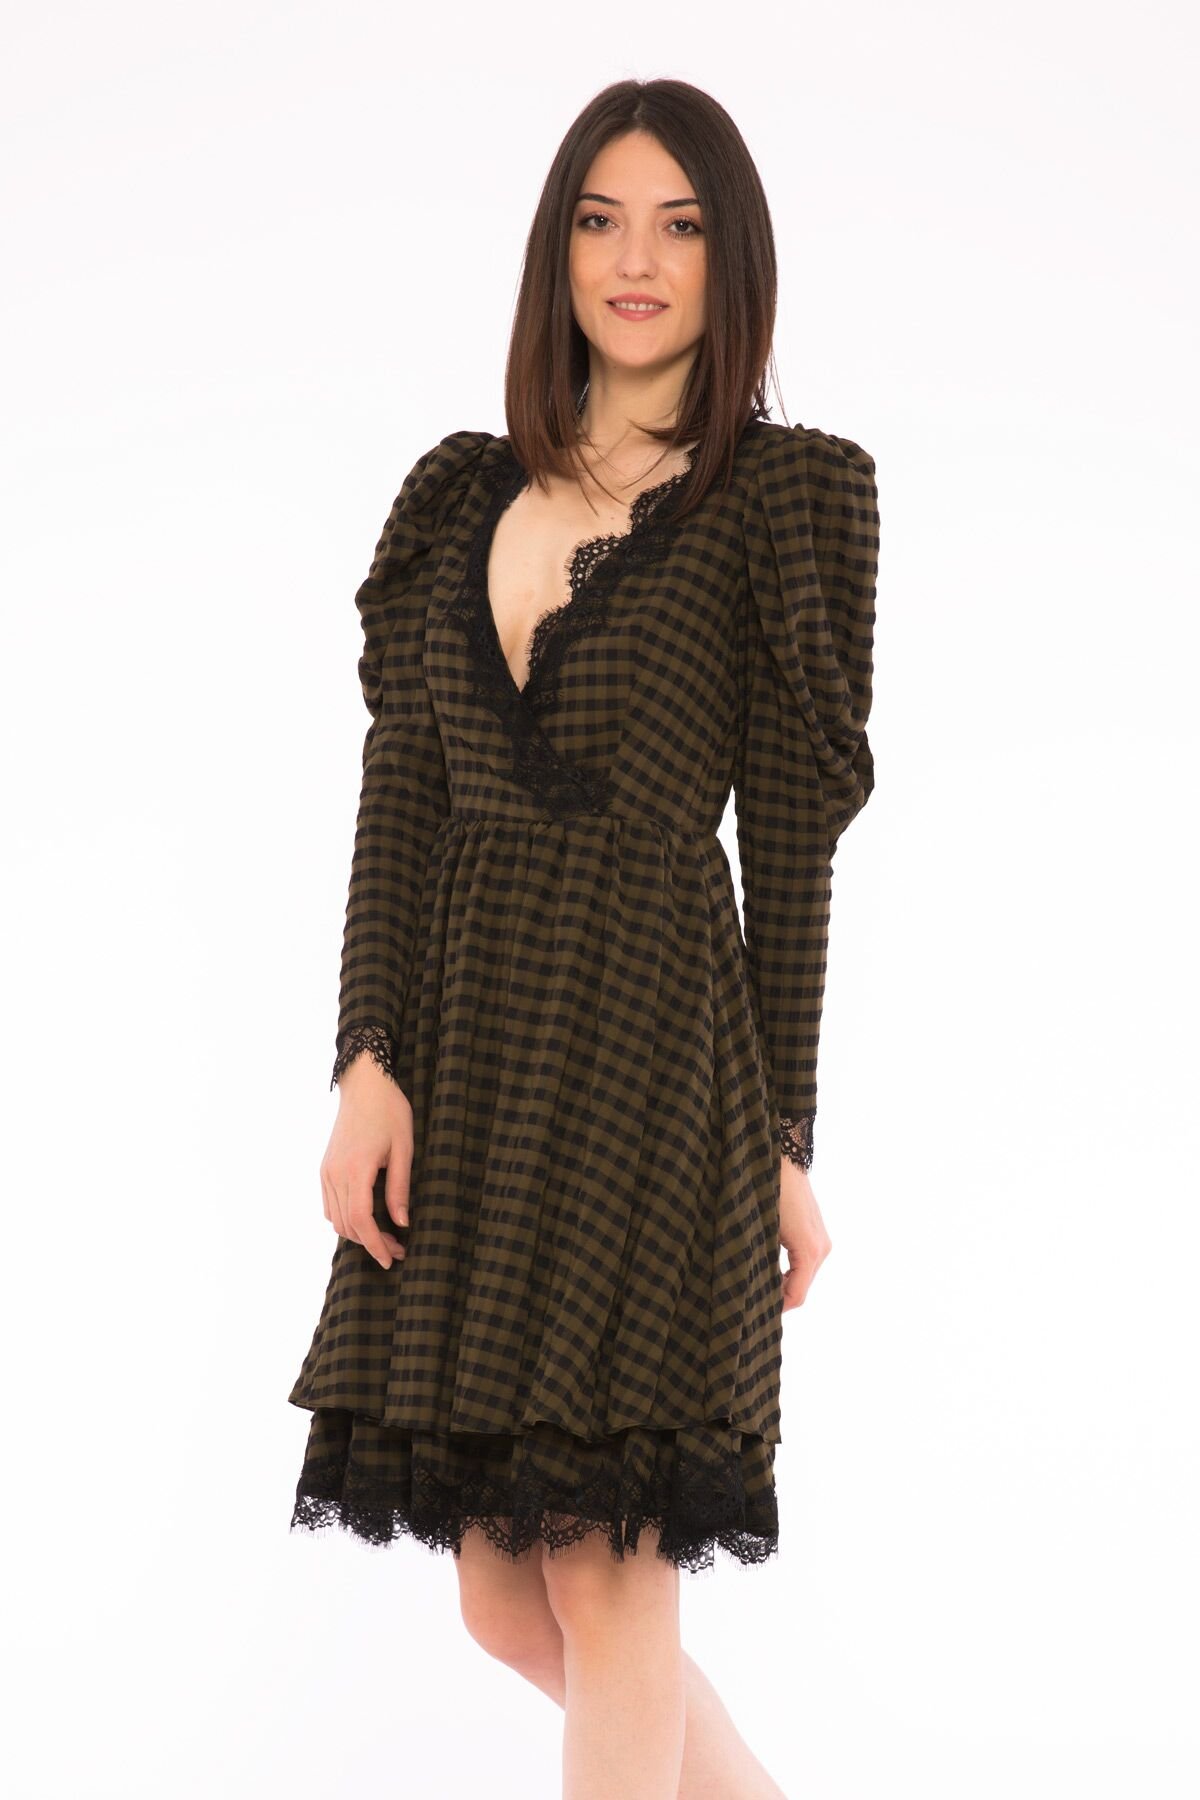 Lace Detailed, Watermelon Sleeve, Plaid Mini Length Khaki Dress